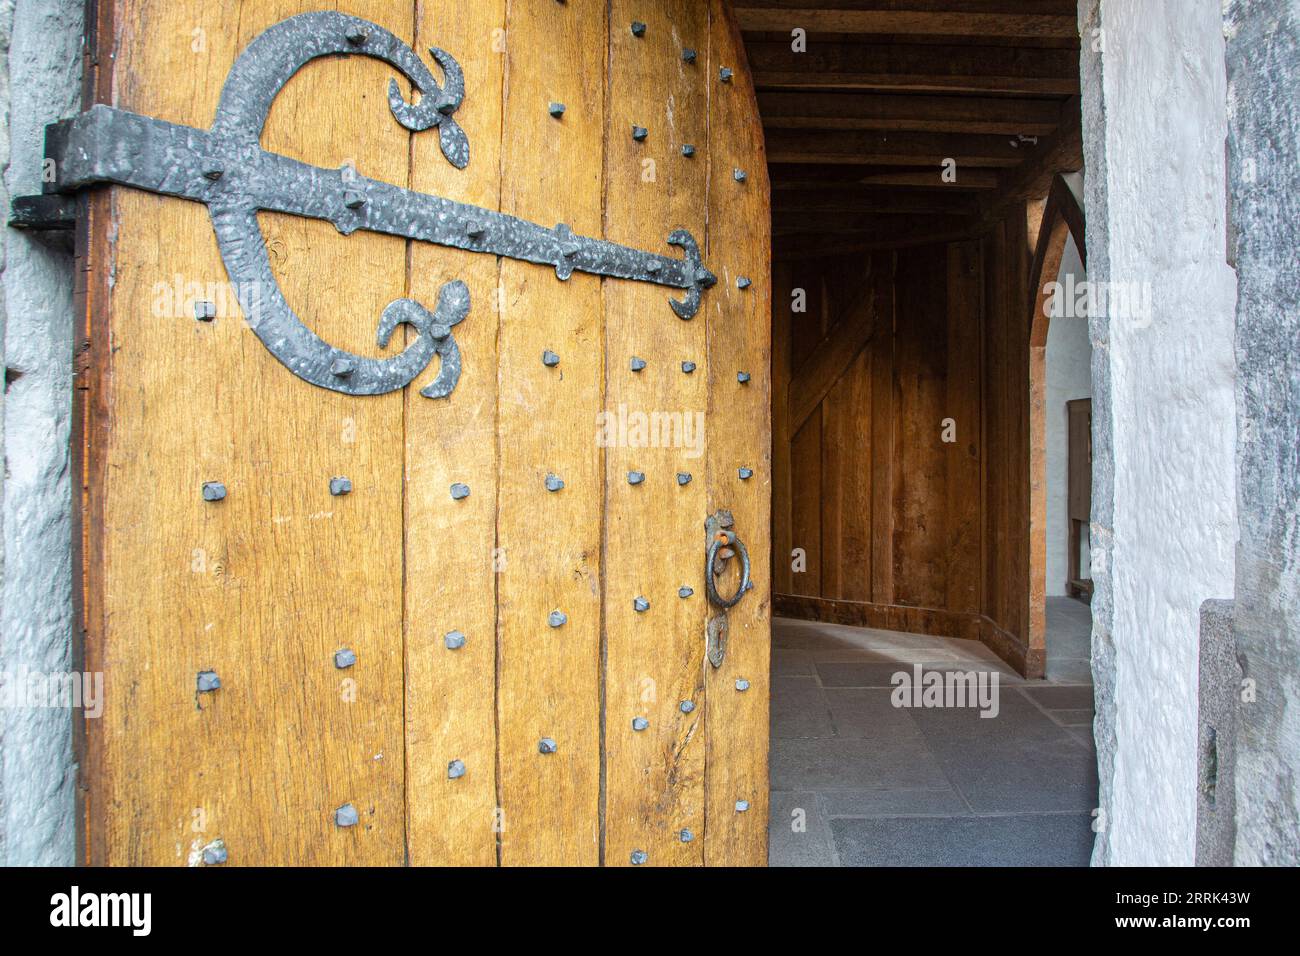 Large oak beamed Castle Door Entrance Stock Photo